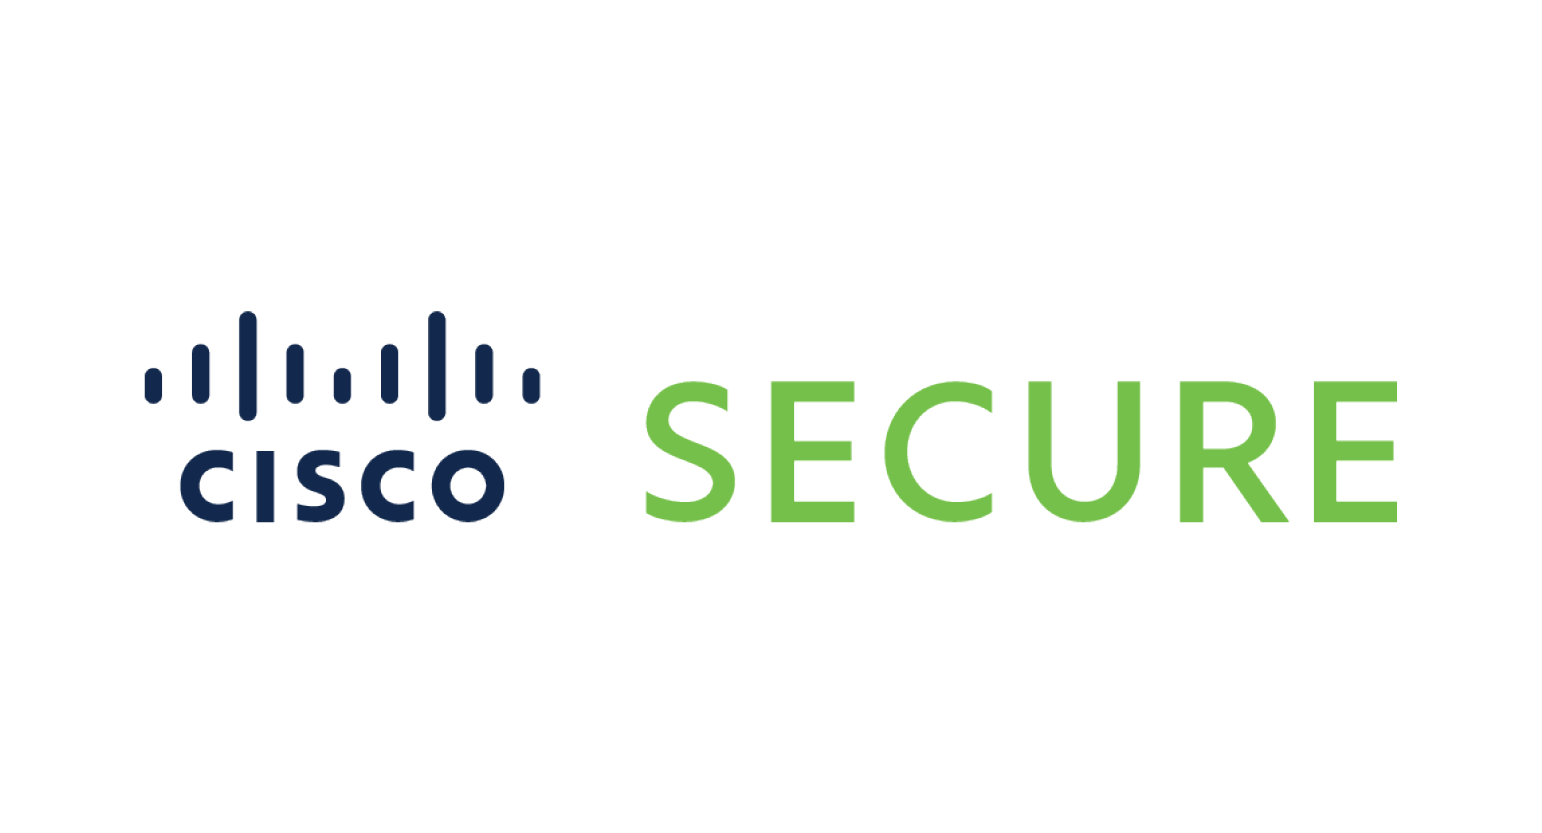 Cisco_Secure.png